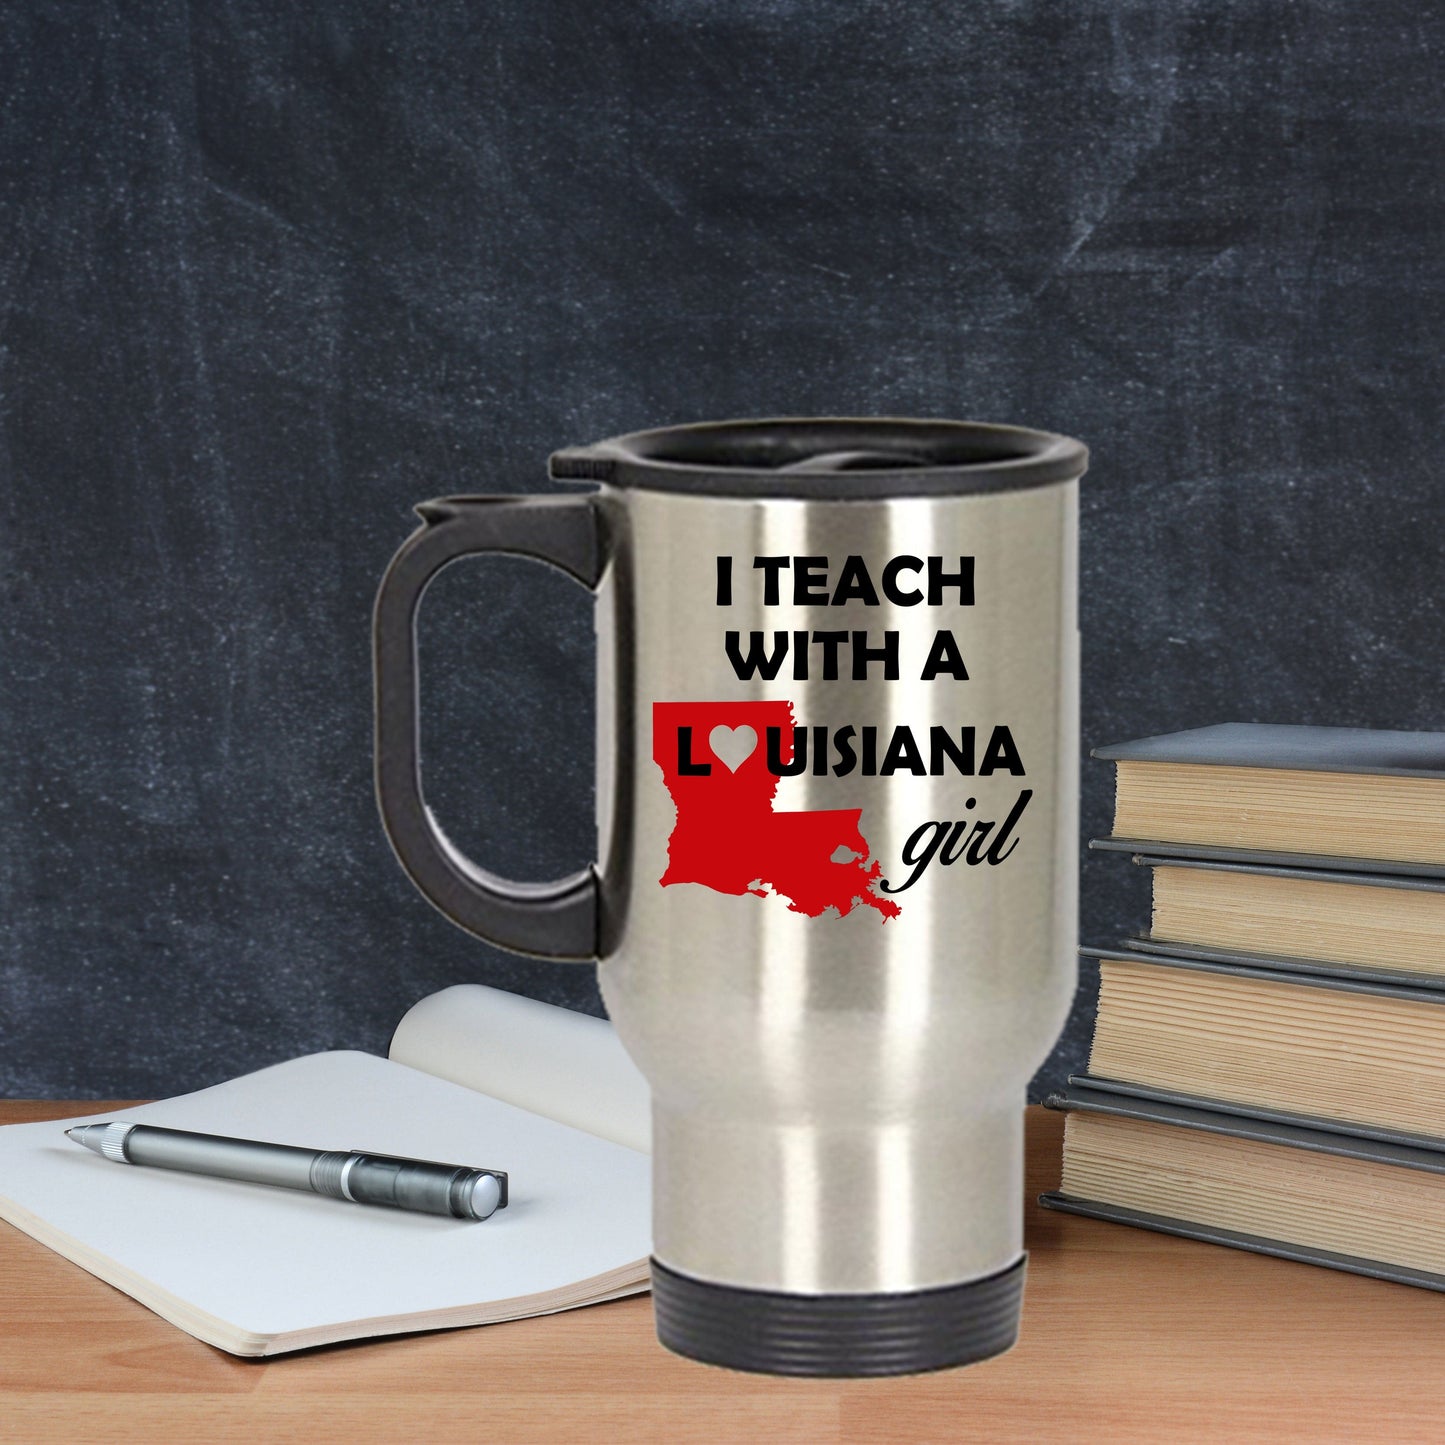 Louisiana Girl Teacher Travel Mug